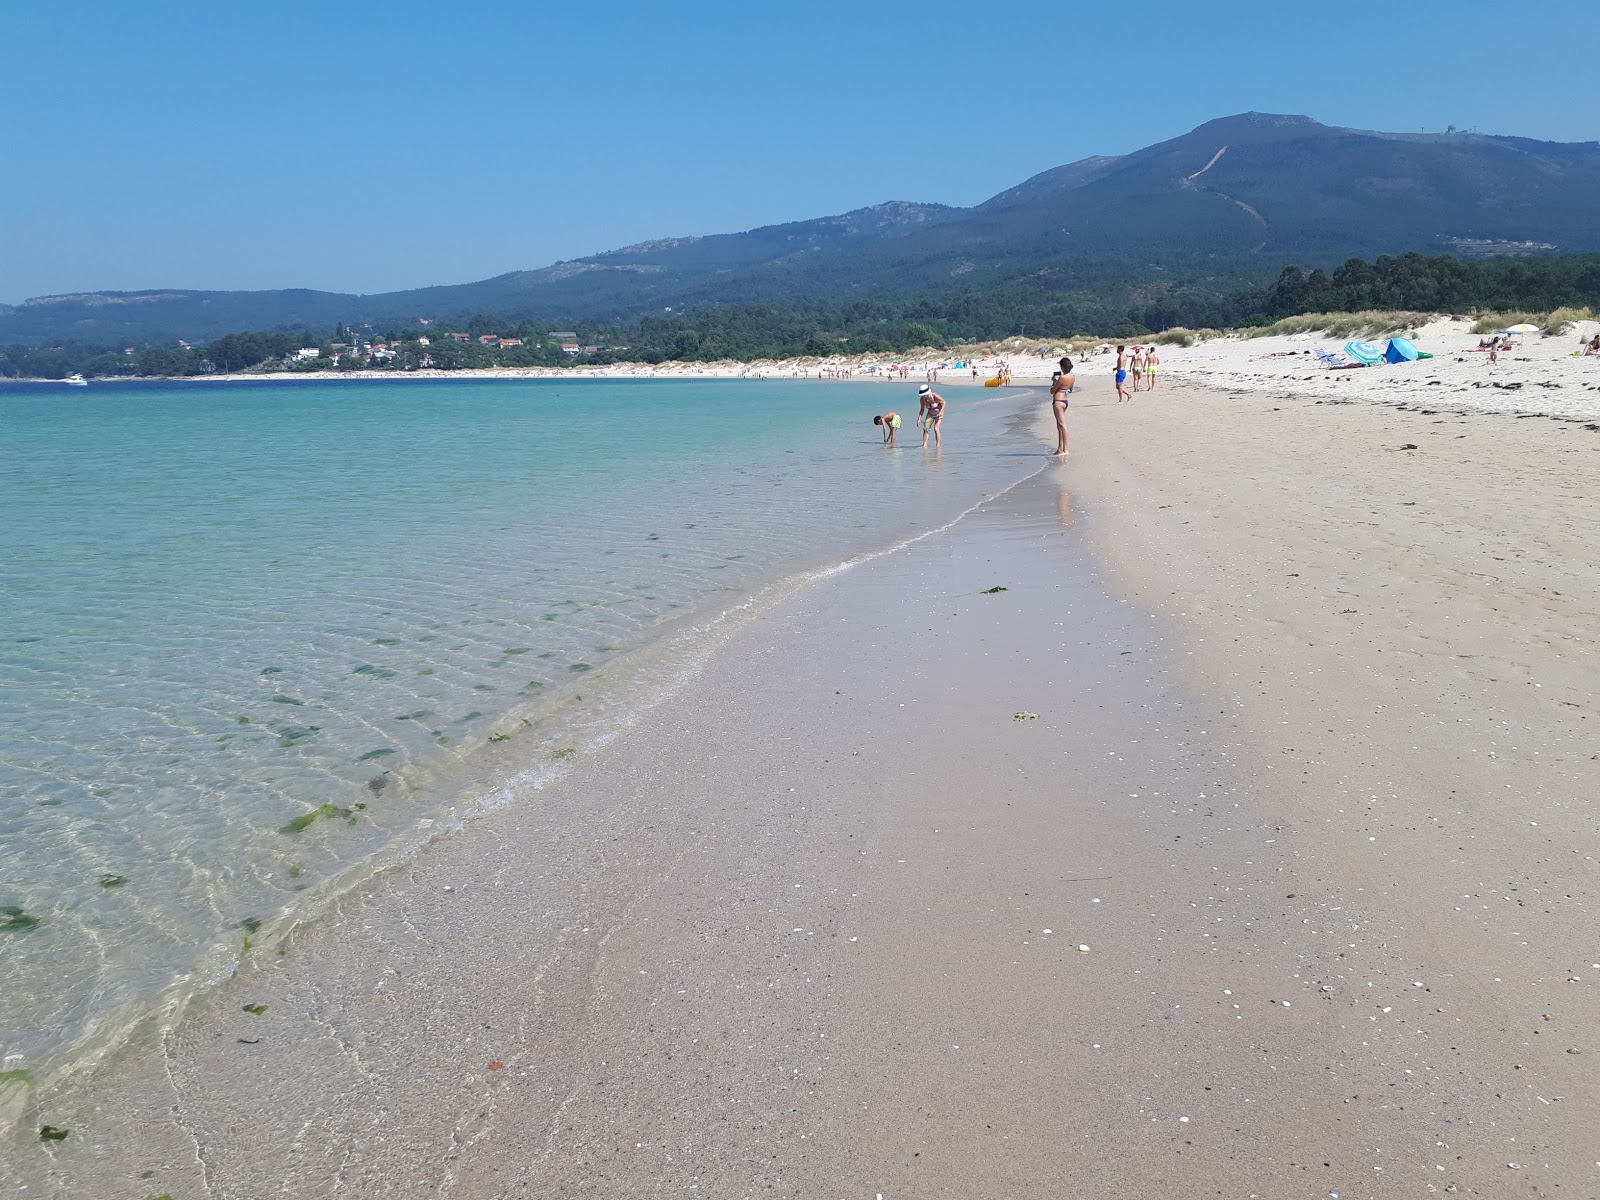 Fotografija Plaža Aguieira z beli fini pesek površino